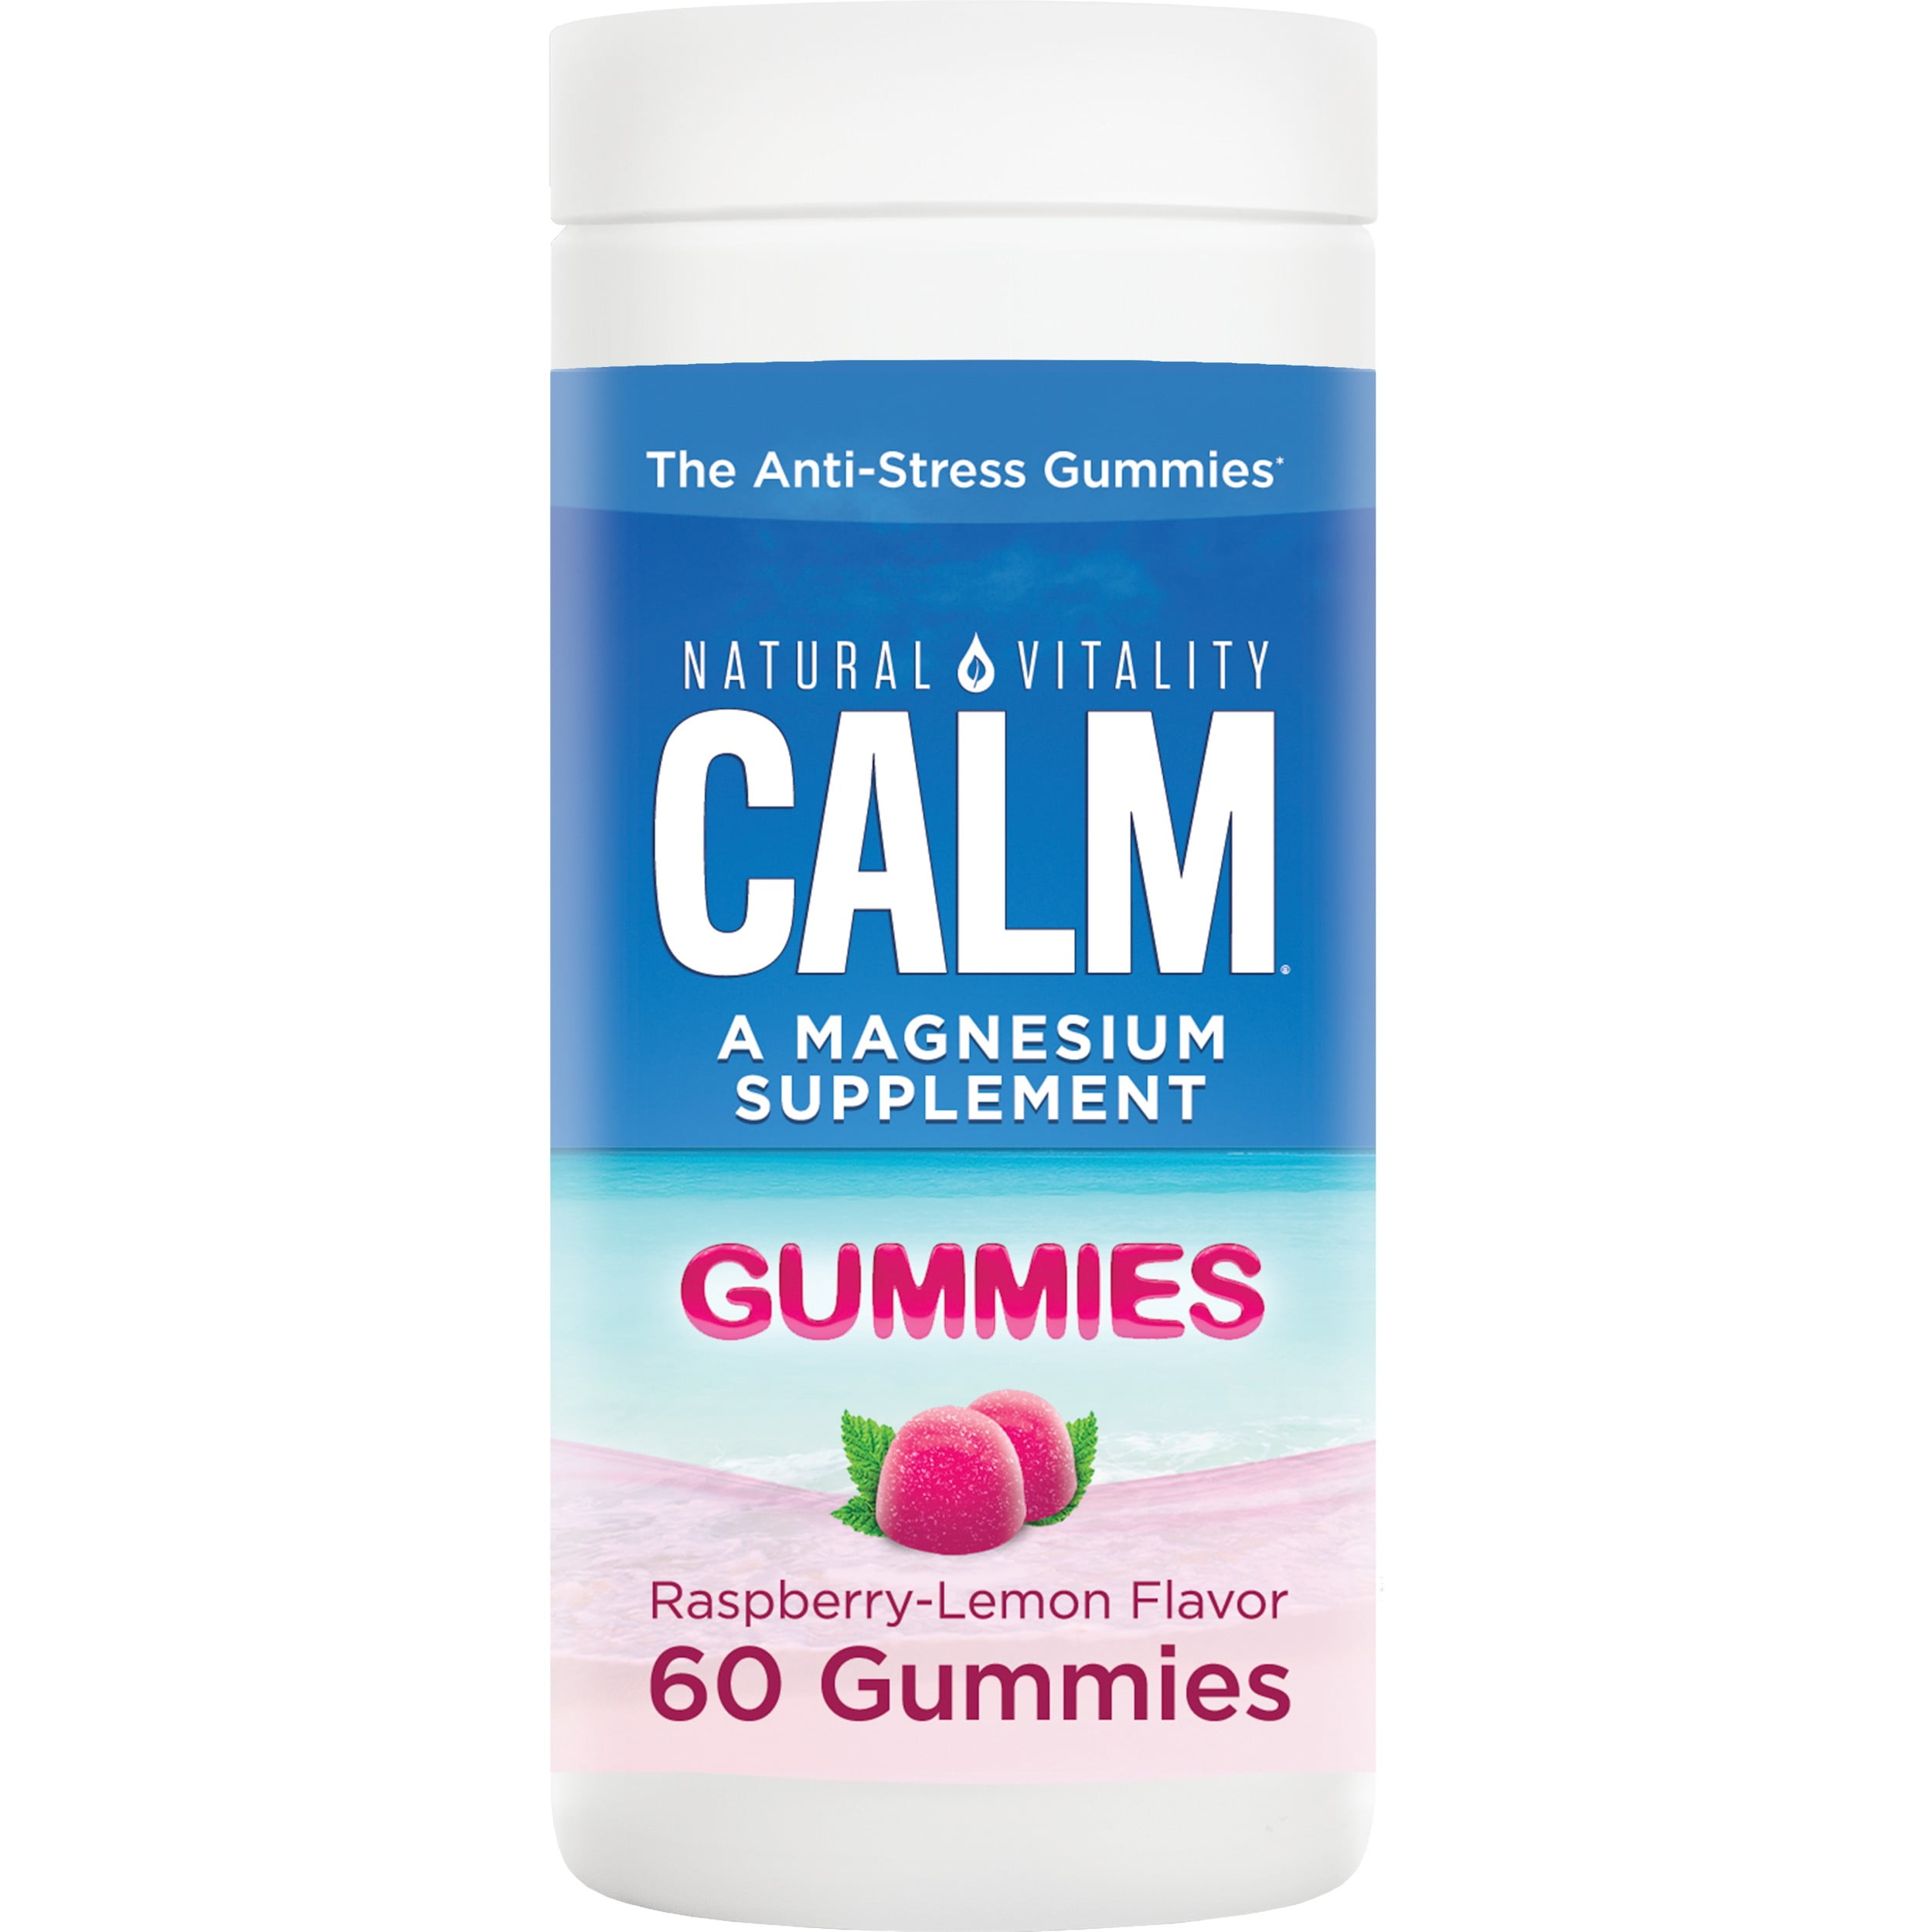 Natural Vitality CALM Gummies, Magnesium Supplement, Raspberry-Lemon Flavor, 60 Gummies